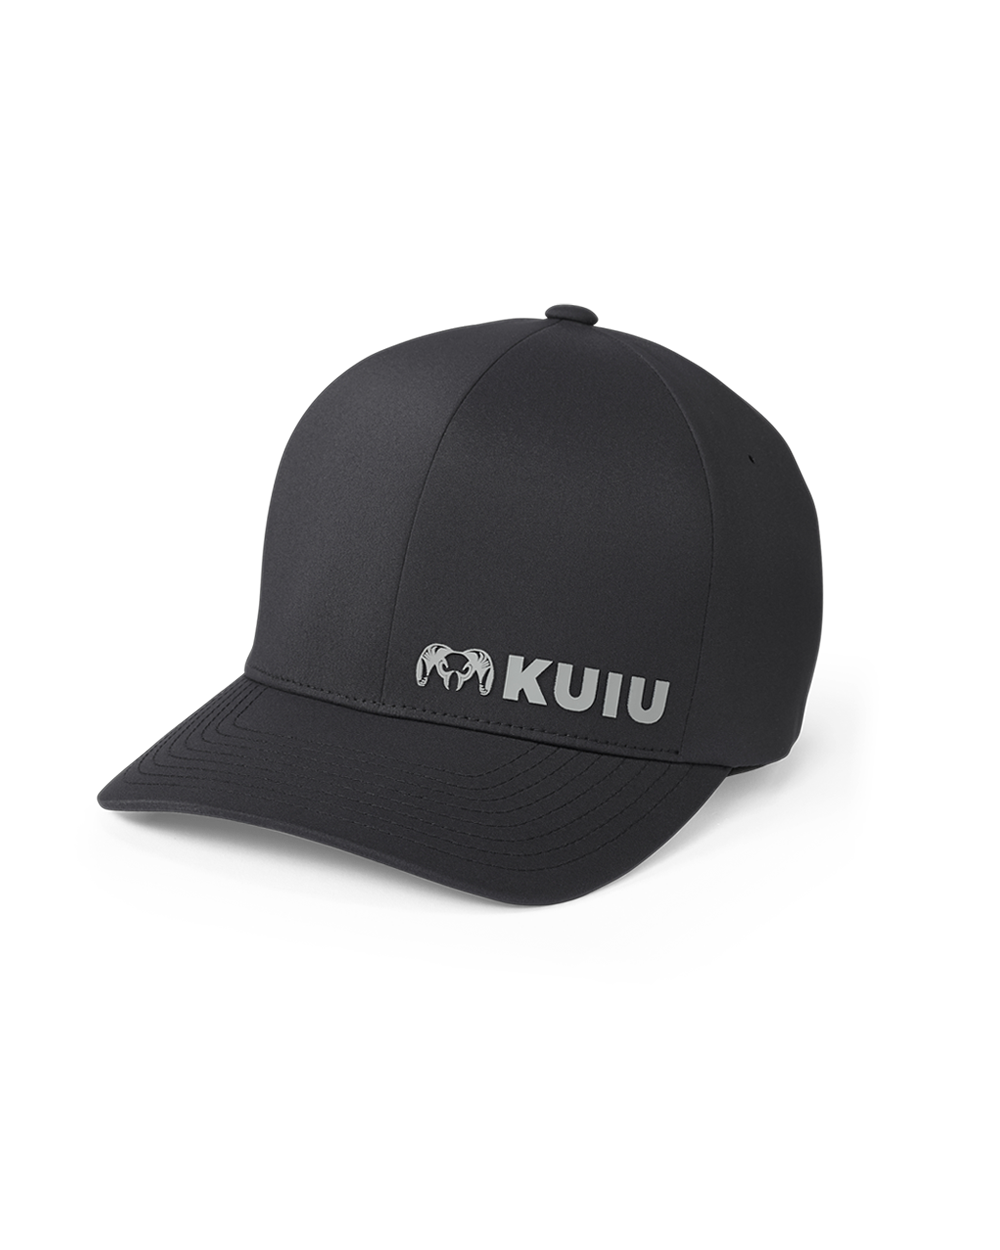 KUIU Flexfit Delta Cap in Black | Size Small/M